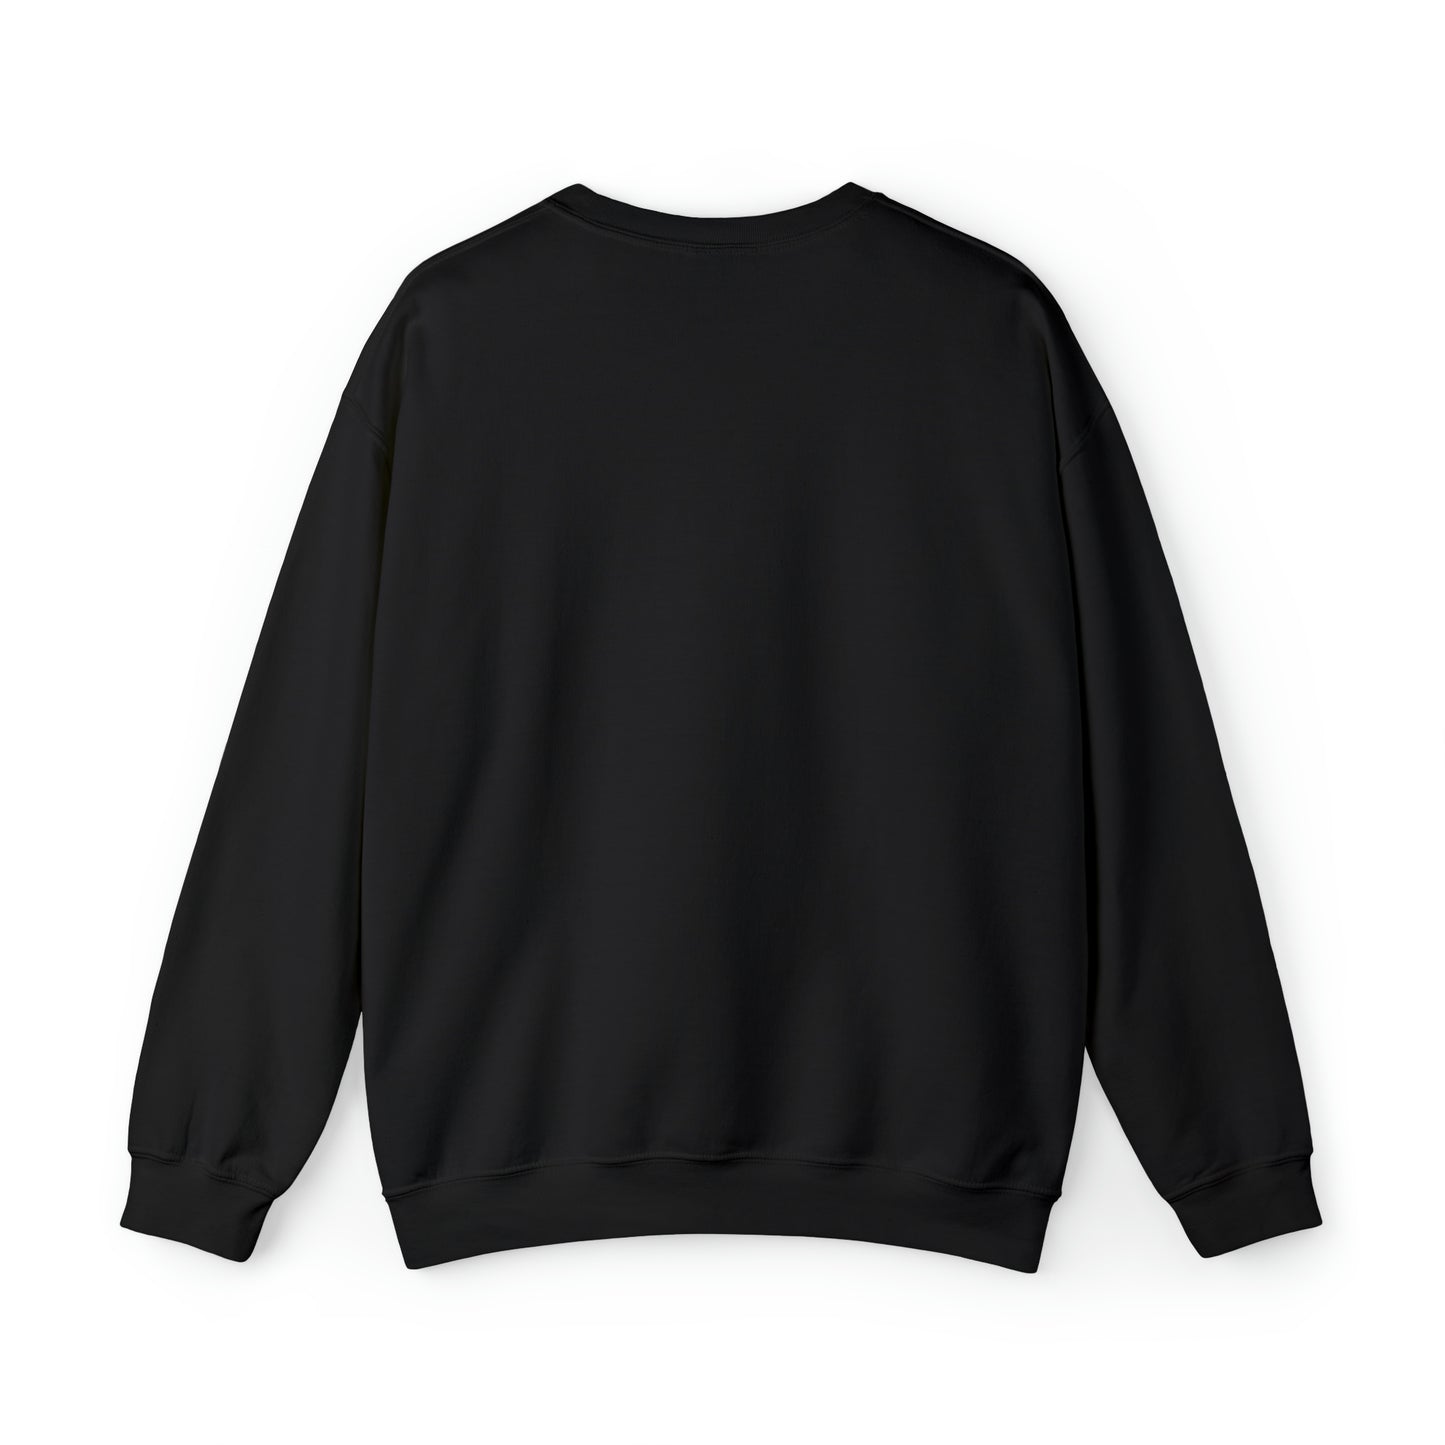 Fallen Angel Sweatshirt - Cabanel sweatshirt